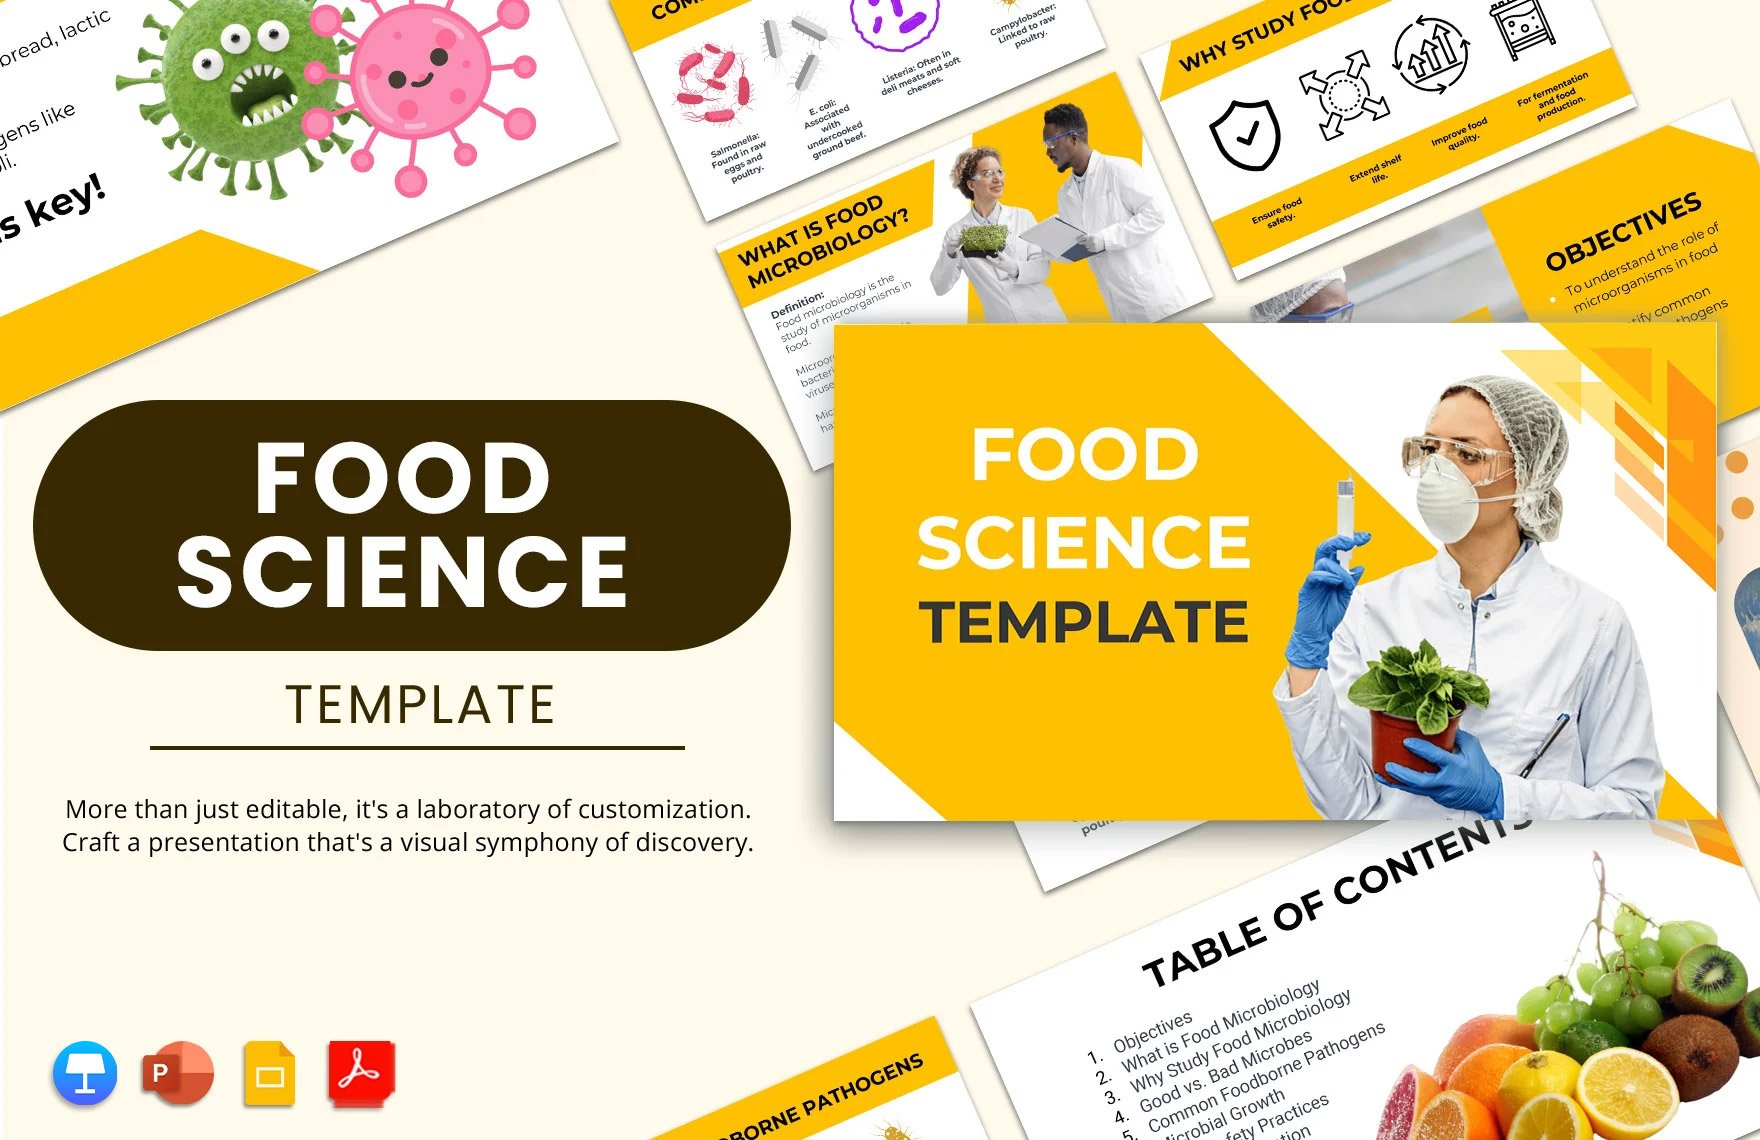 Food Science Template